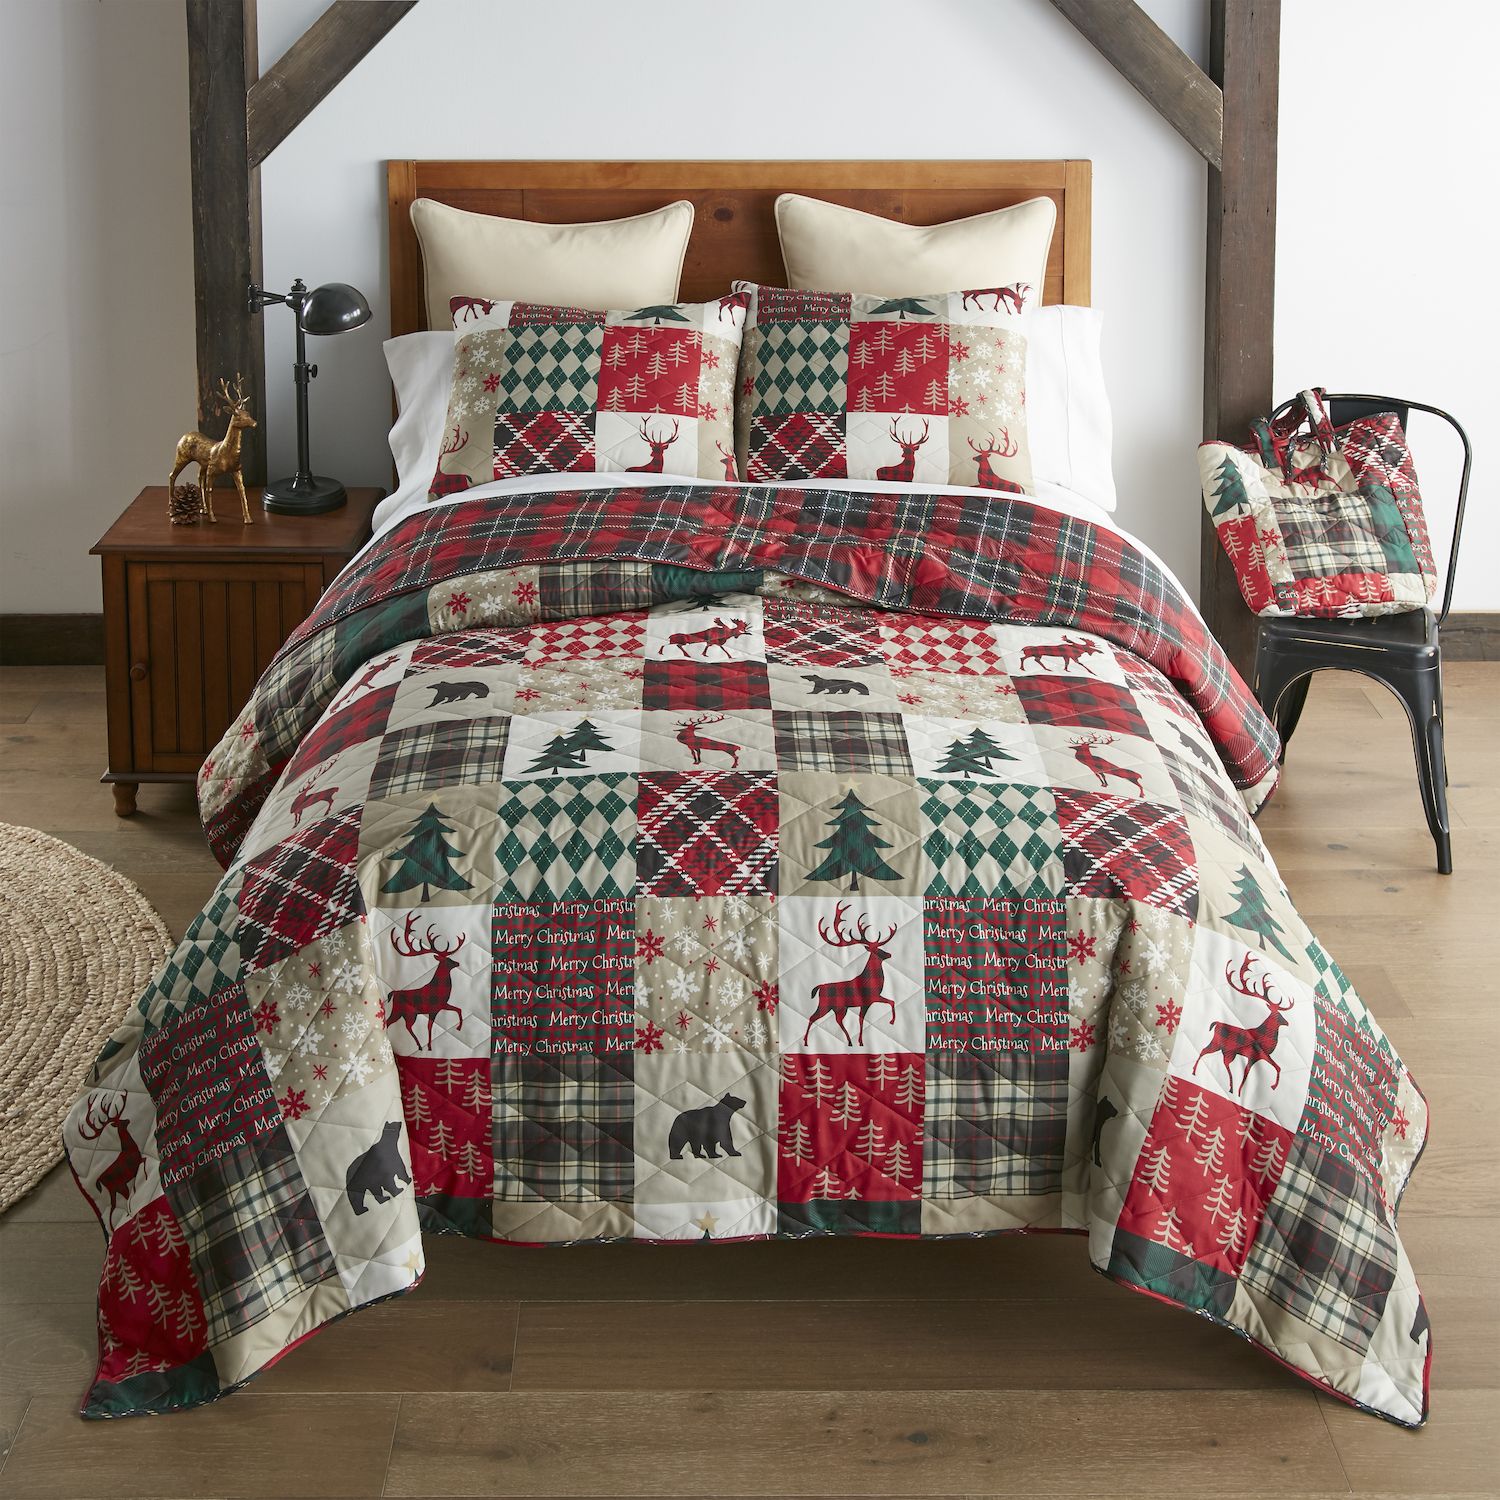 Image for Donna Sharp Christmas Lodge Quilt Set at Kohl's.